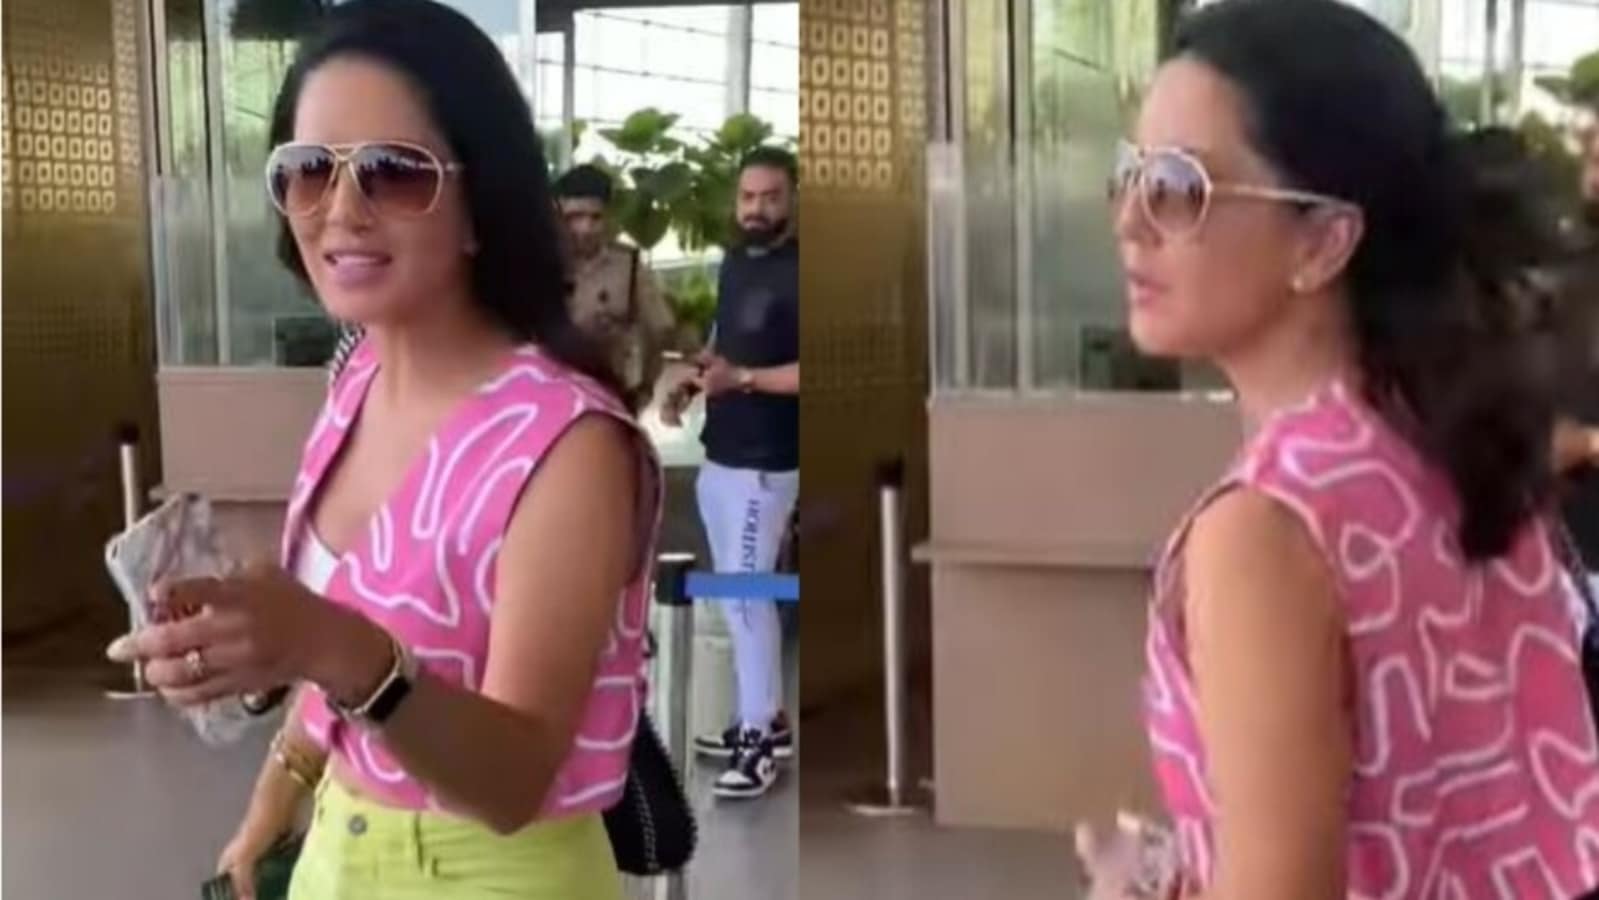 Sanilioni Ki Hindi Bolte Sex - Sunny Leone asks paparazzi if they think she can't speak Hindi. Watch |  Bollywood - Hindustan Times